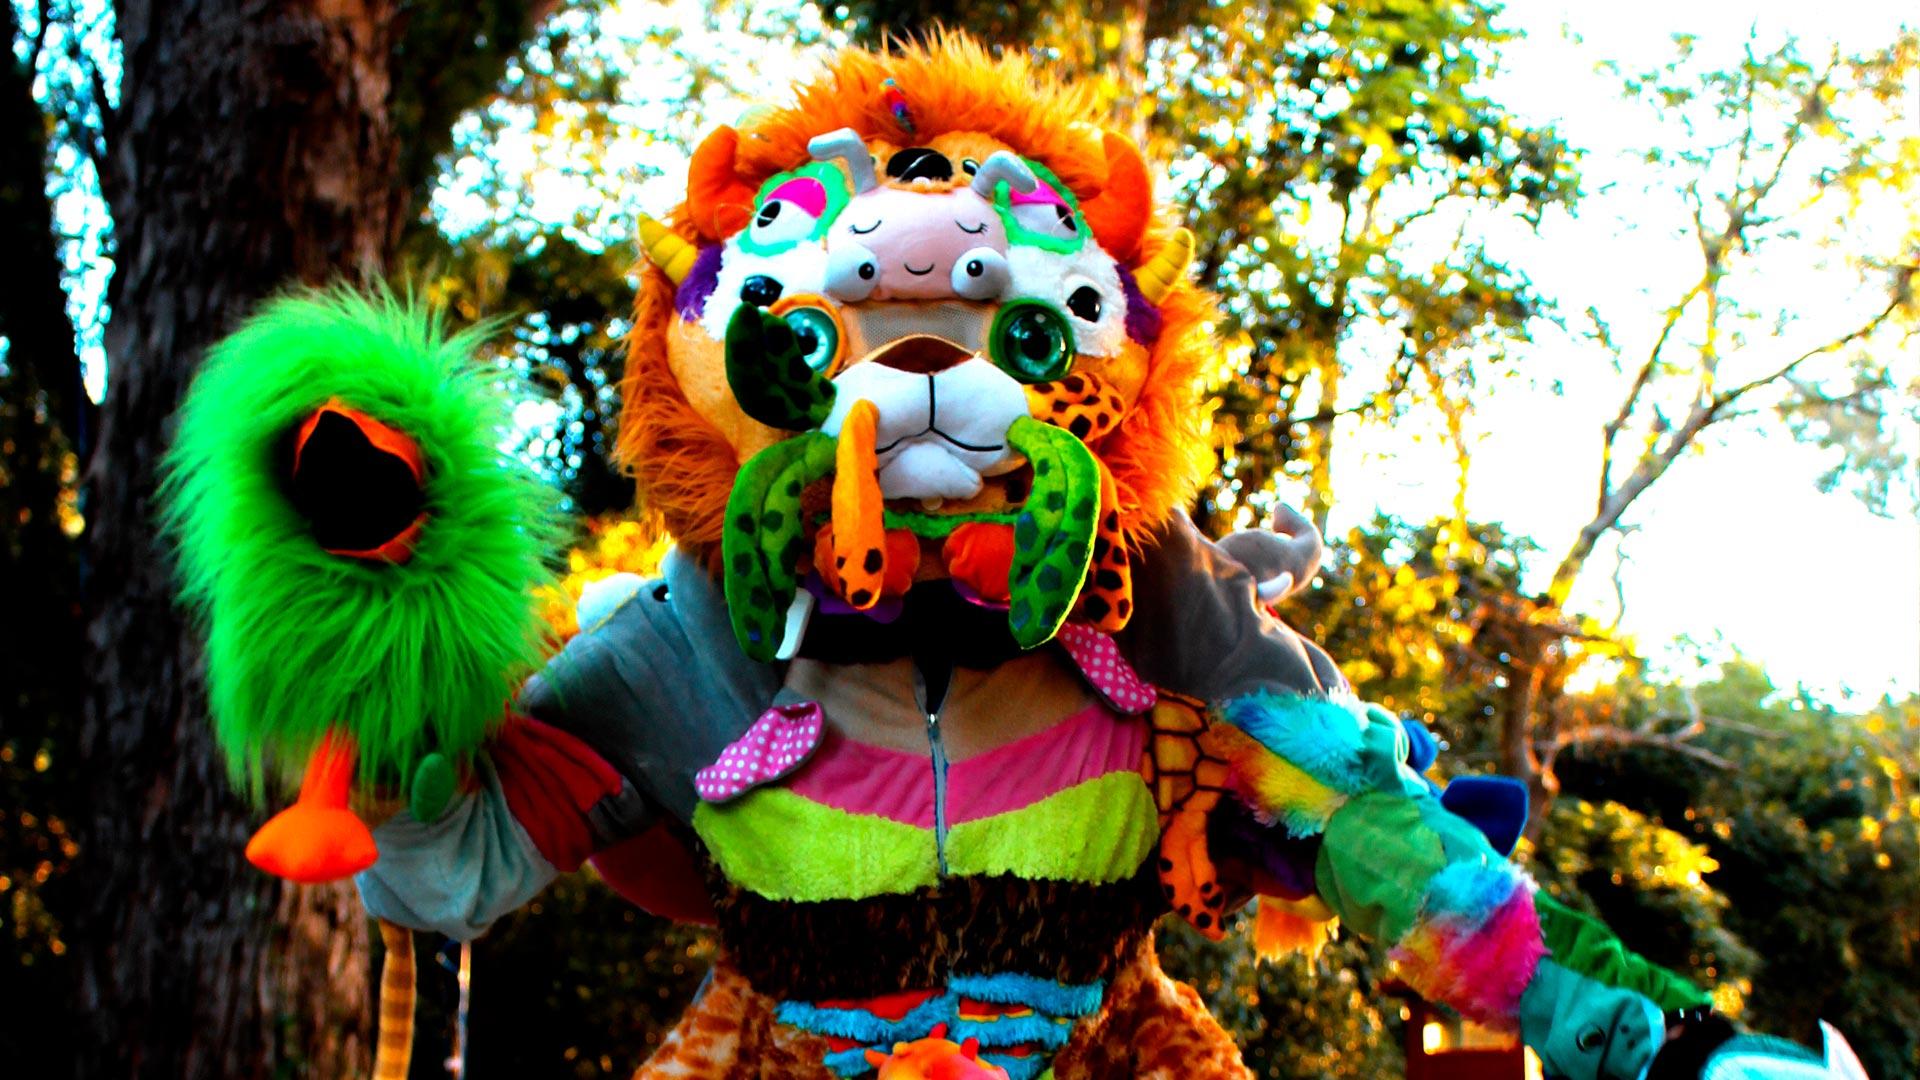 Jungle Love Festival Stuffed toy character costume